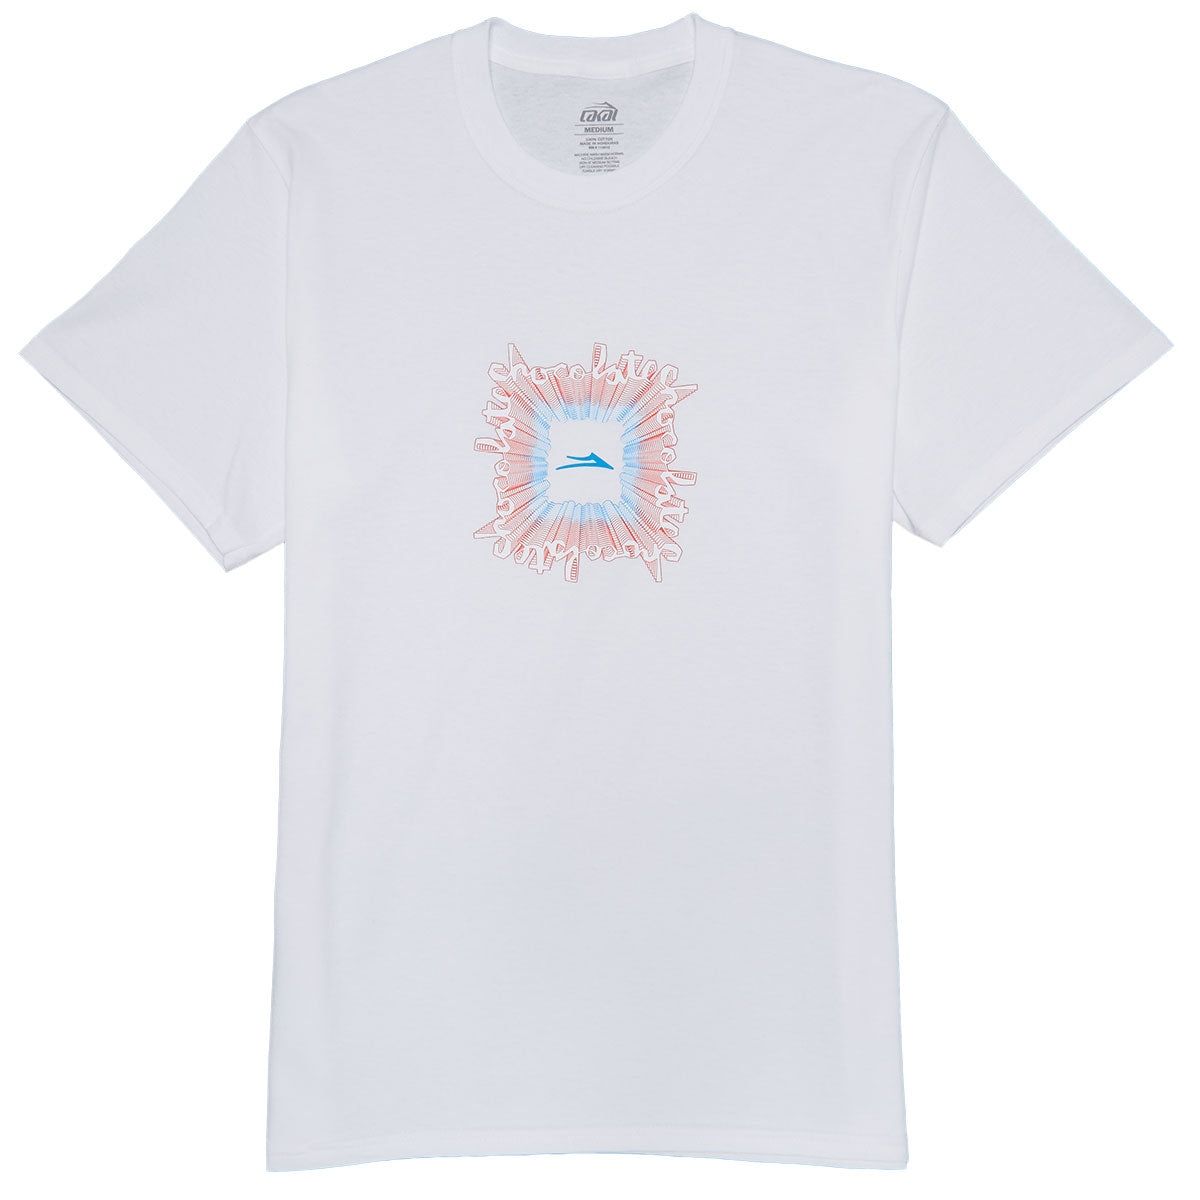 Lakai Vortex T-Shirt - White image 1